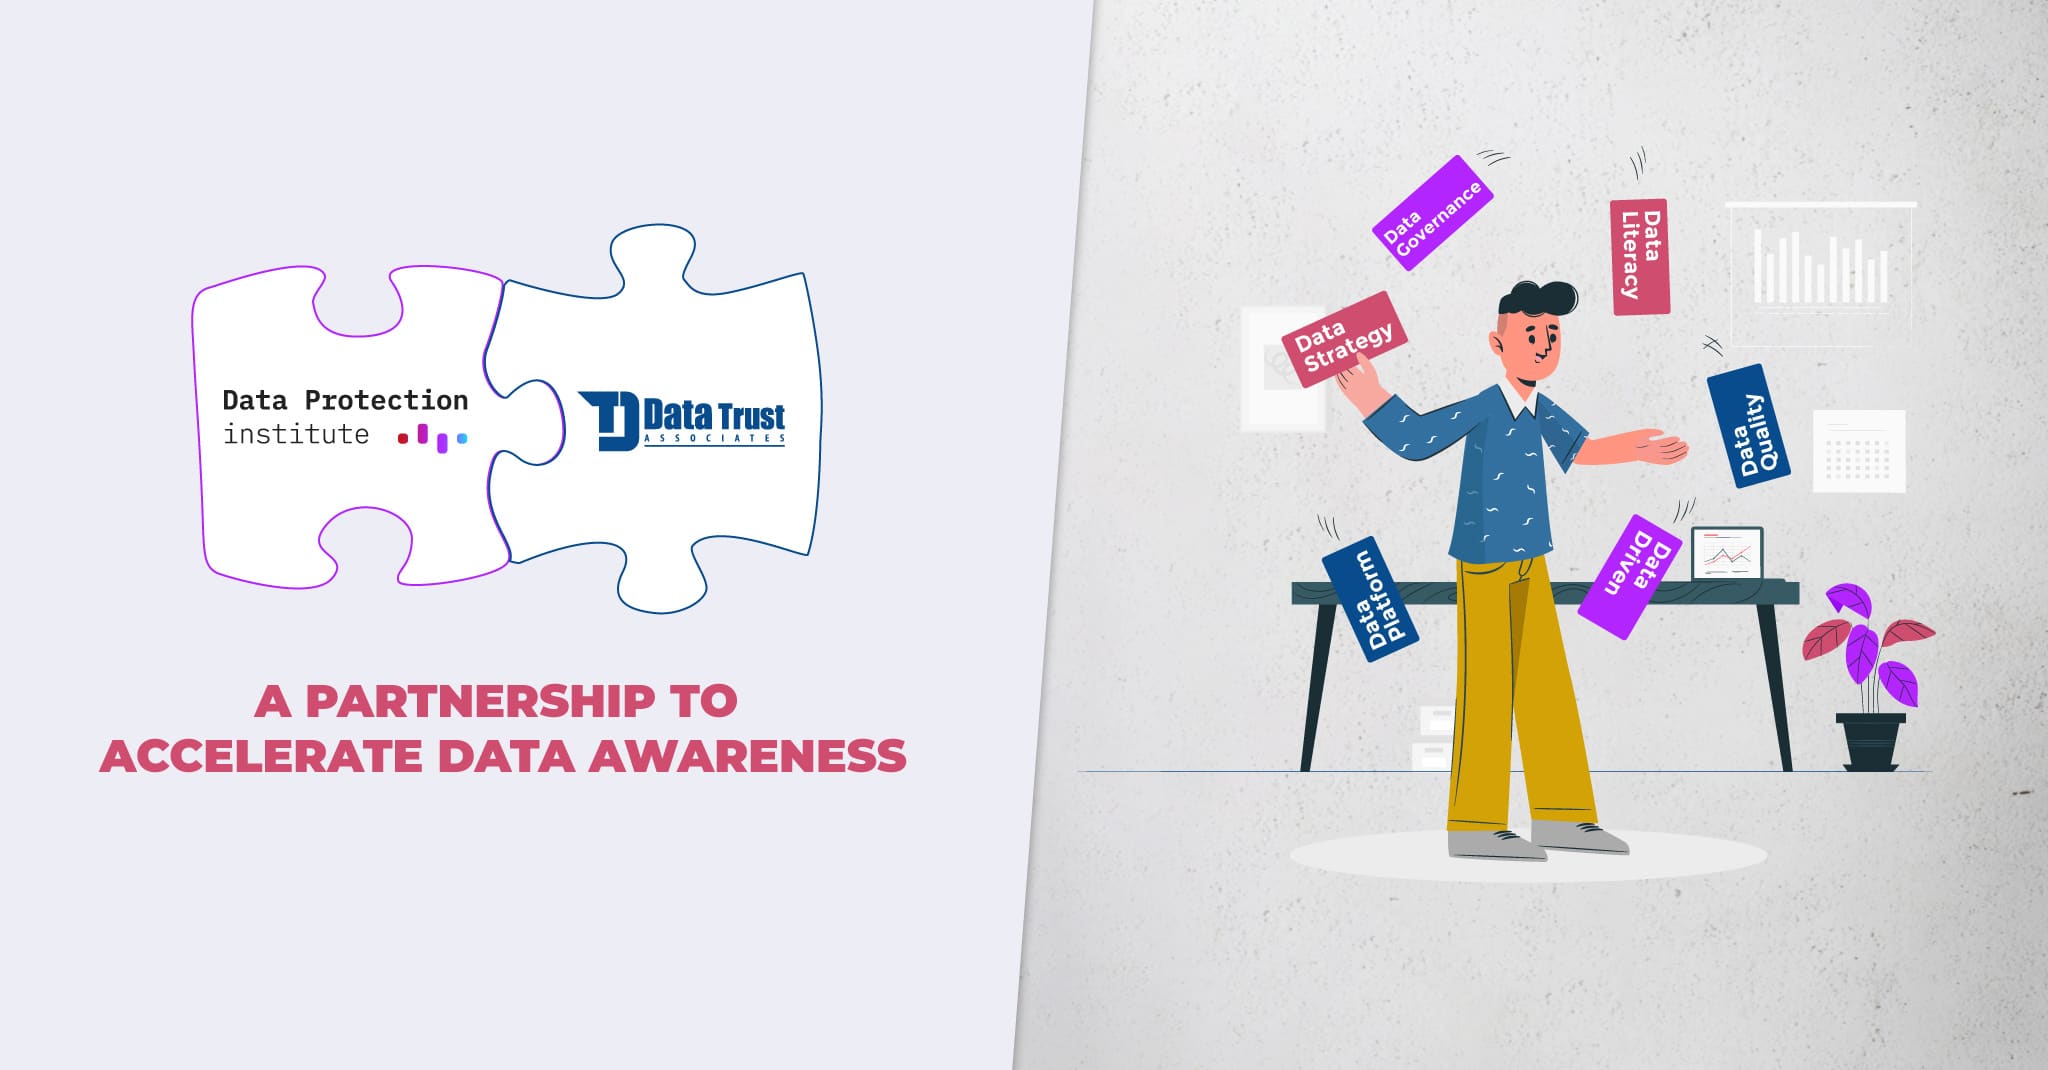 Data Protection Institute and Data Trust Associates partner to accelerate Data Awareness in Belgium